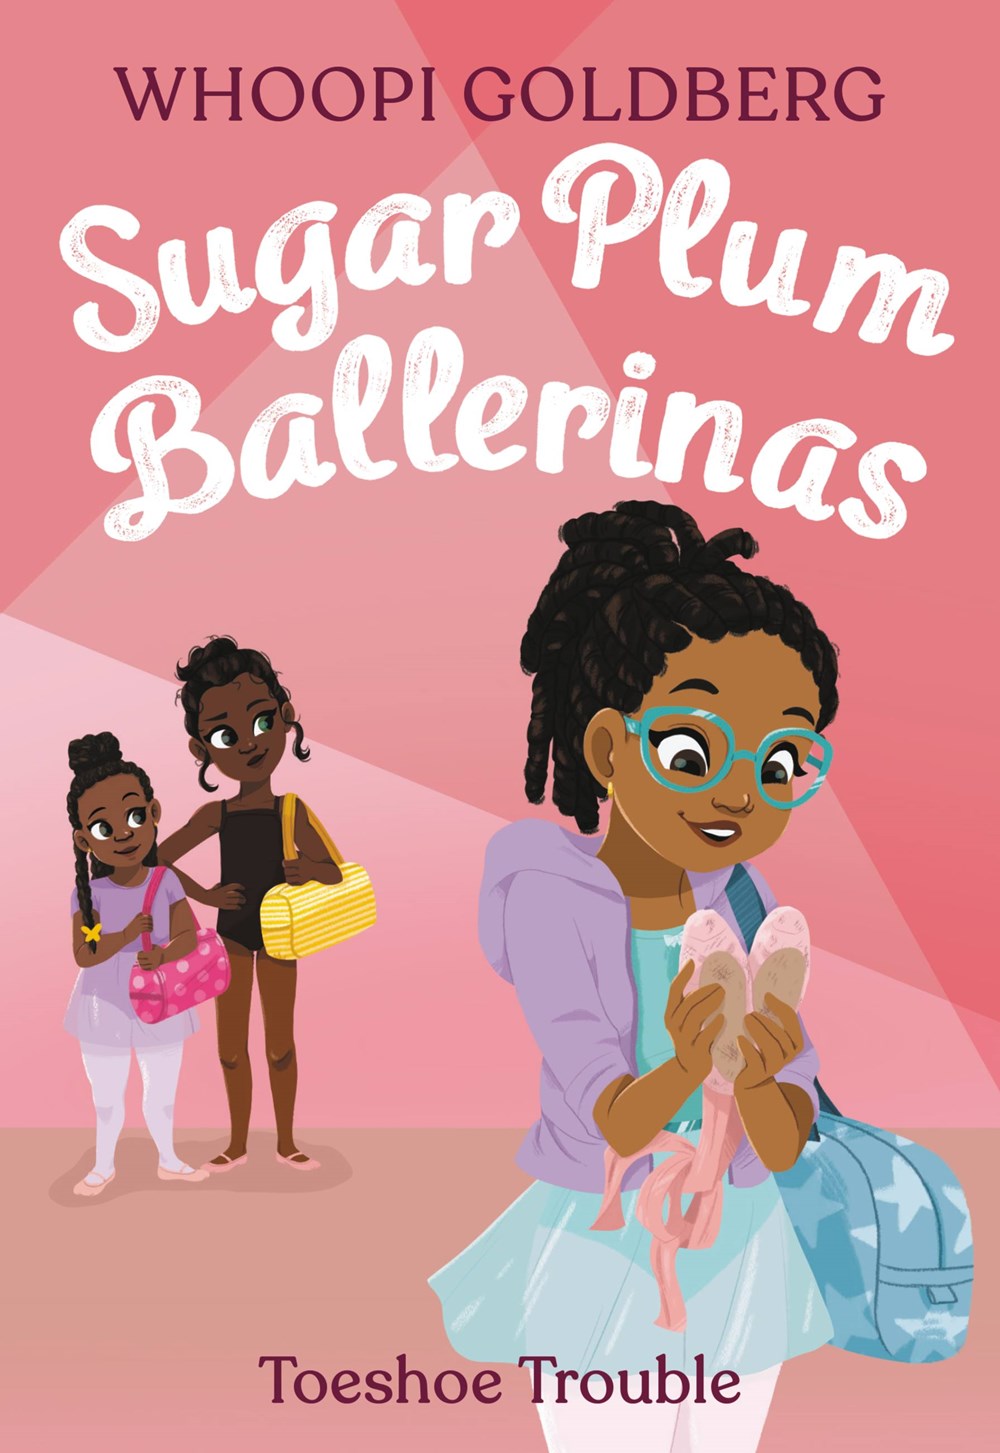 Sugar Plum Ballerinas: Toeshoe Trouble by Whoopi Goldberg